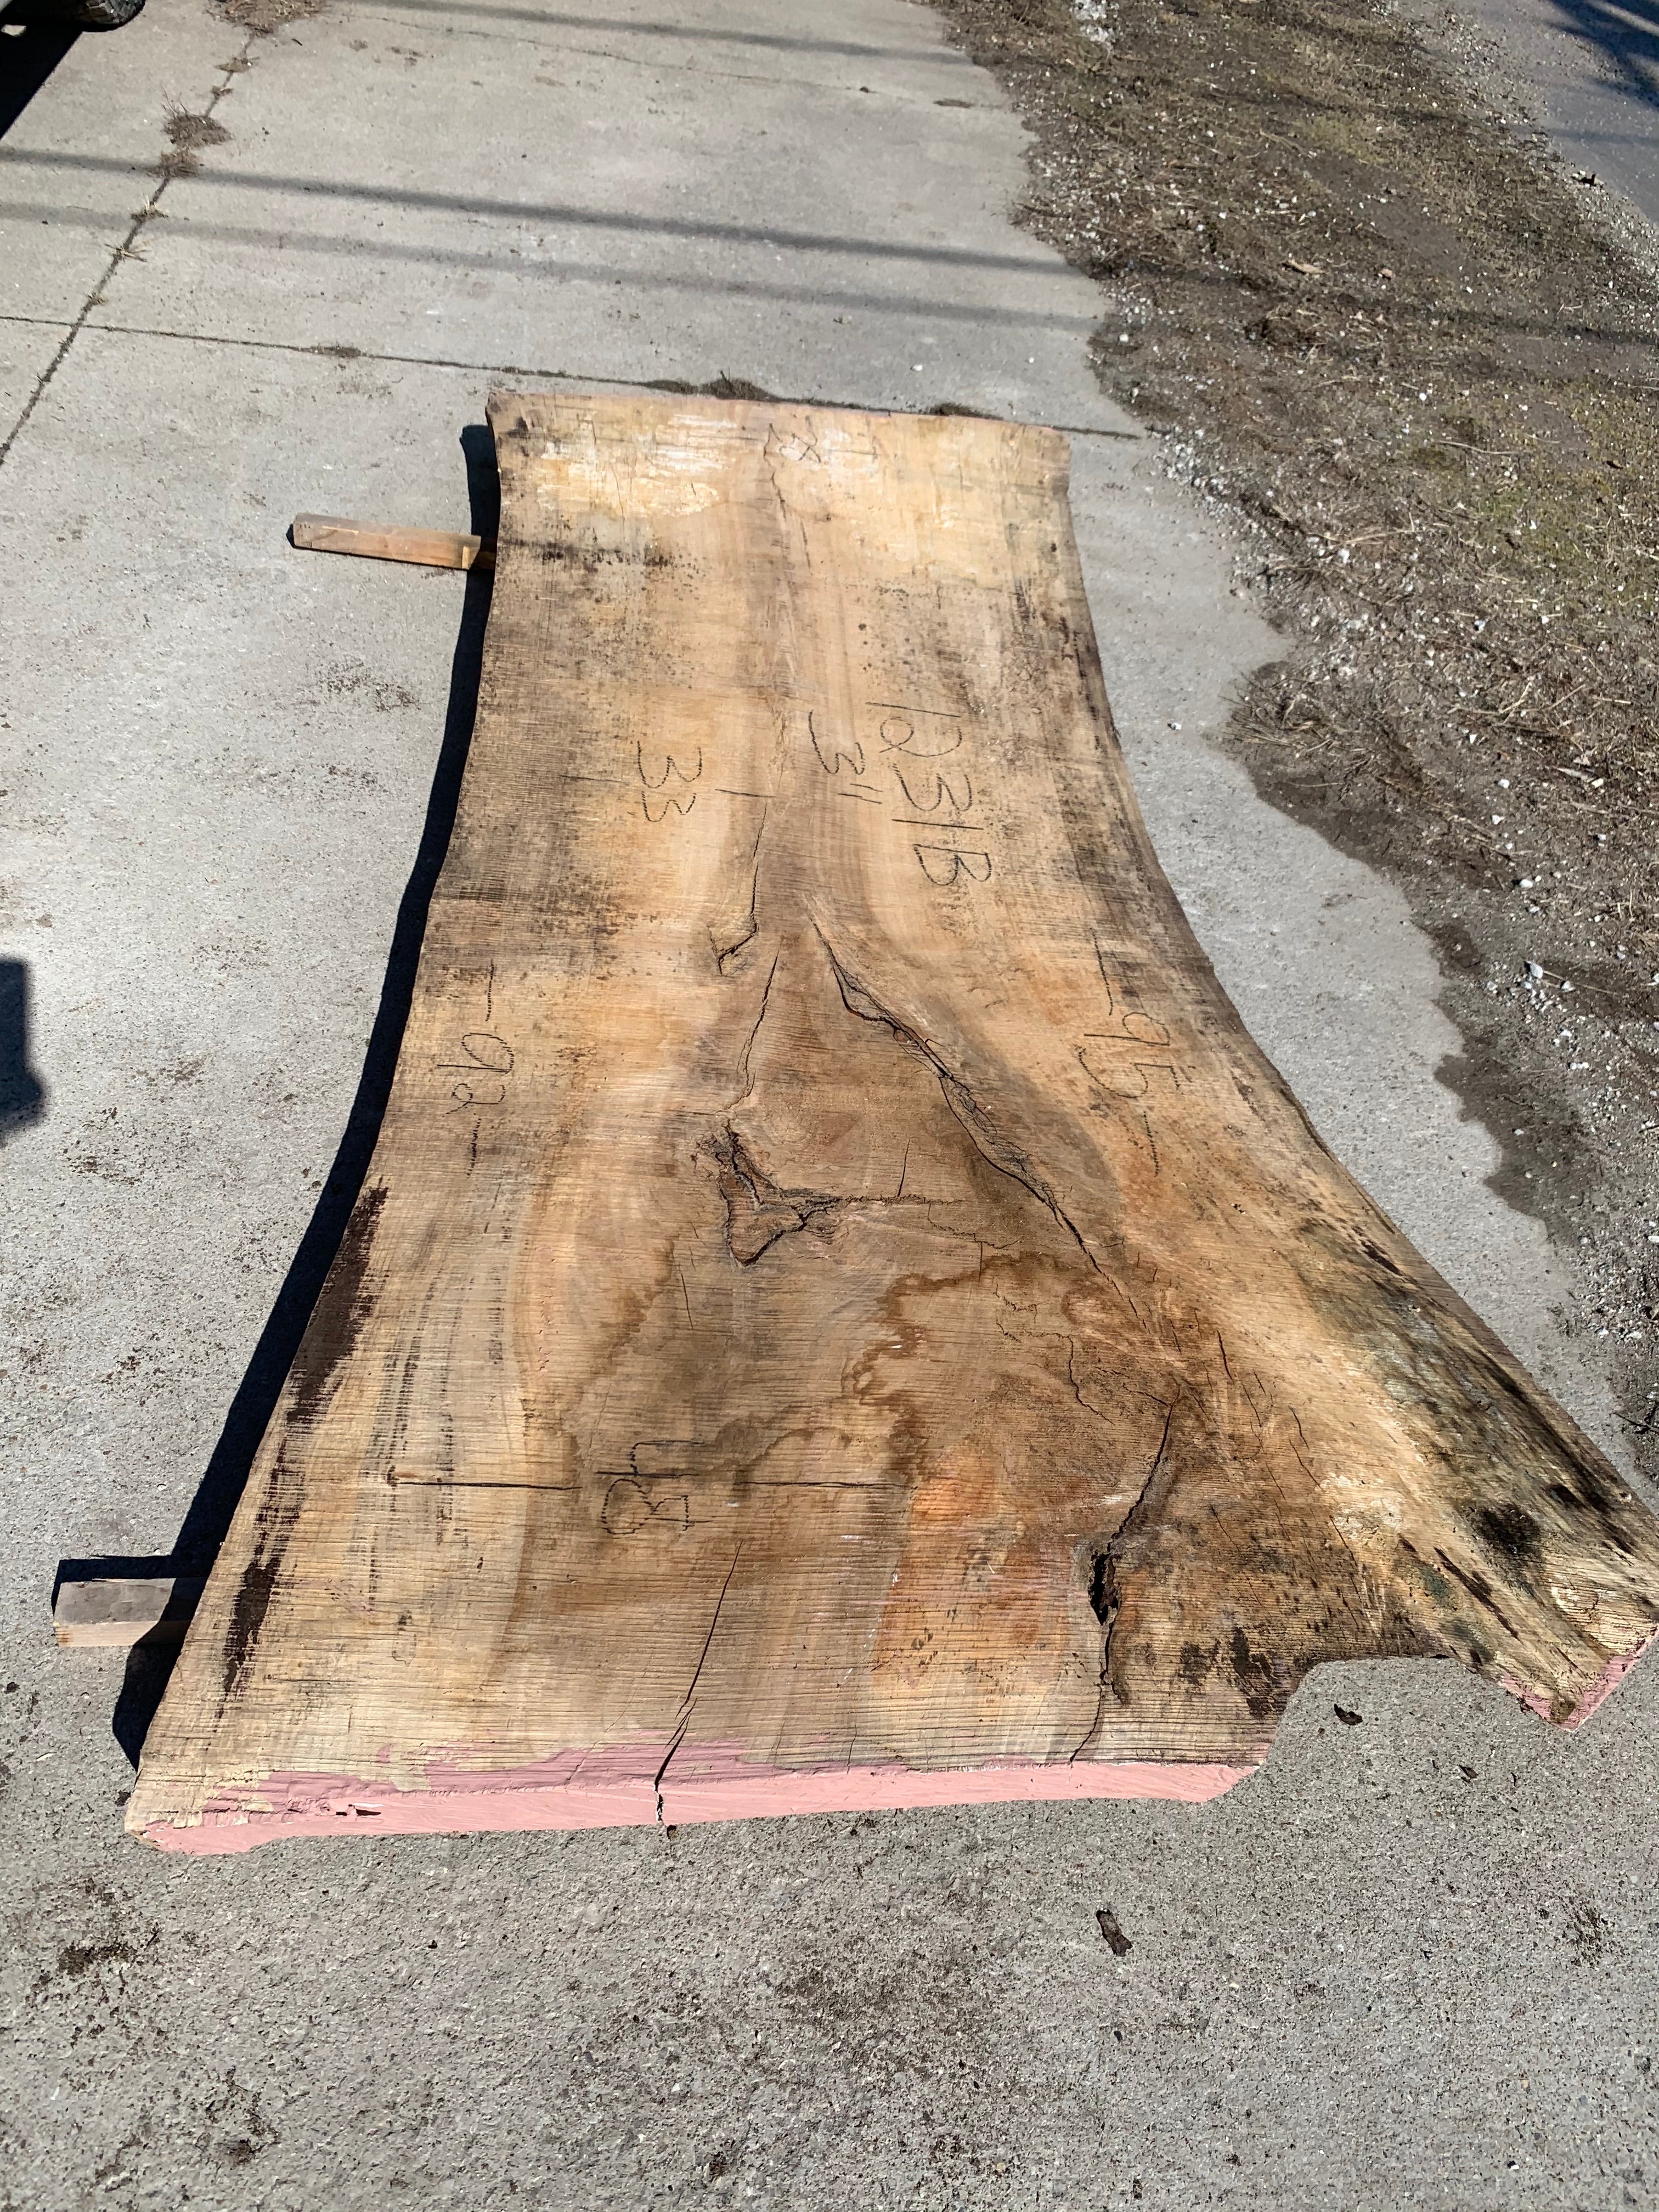 Spalted Soft Maple Slab #1231. Sawmill, mill, lumber, live edge slabs, mantles, floating shelves, wood, logs, log buyer